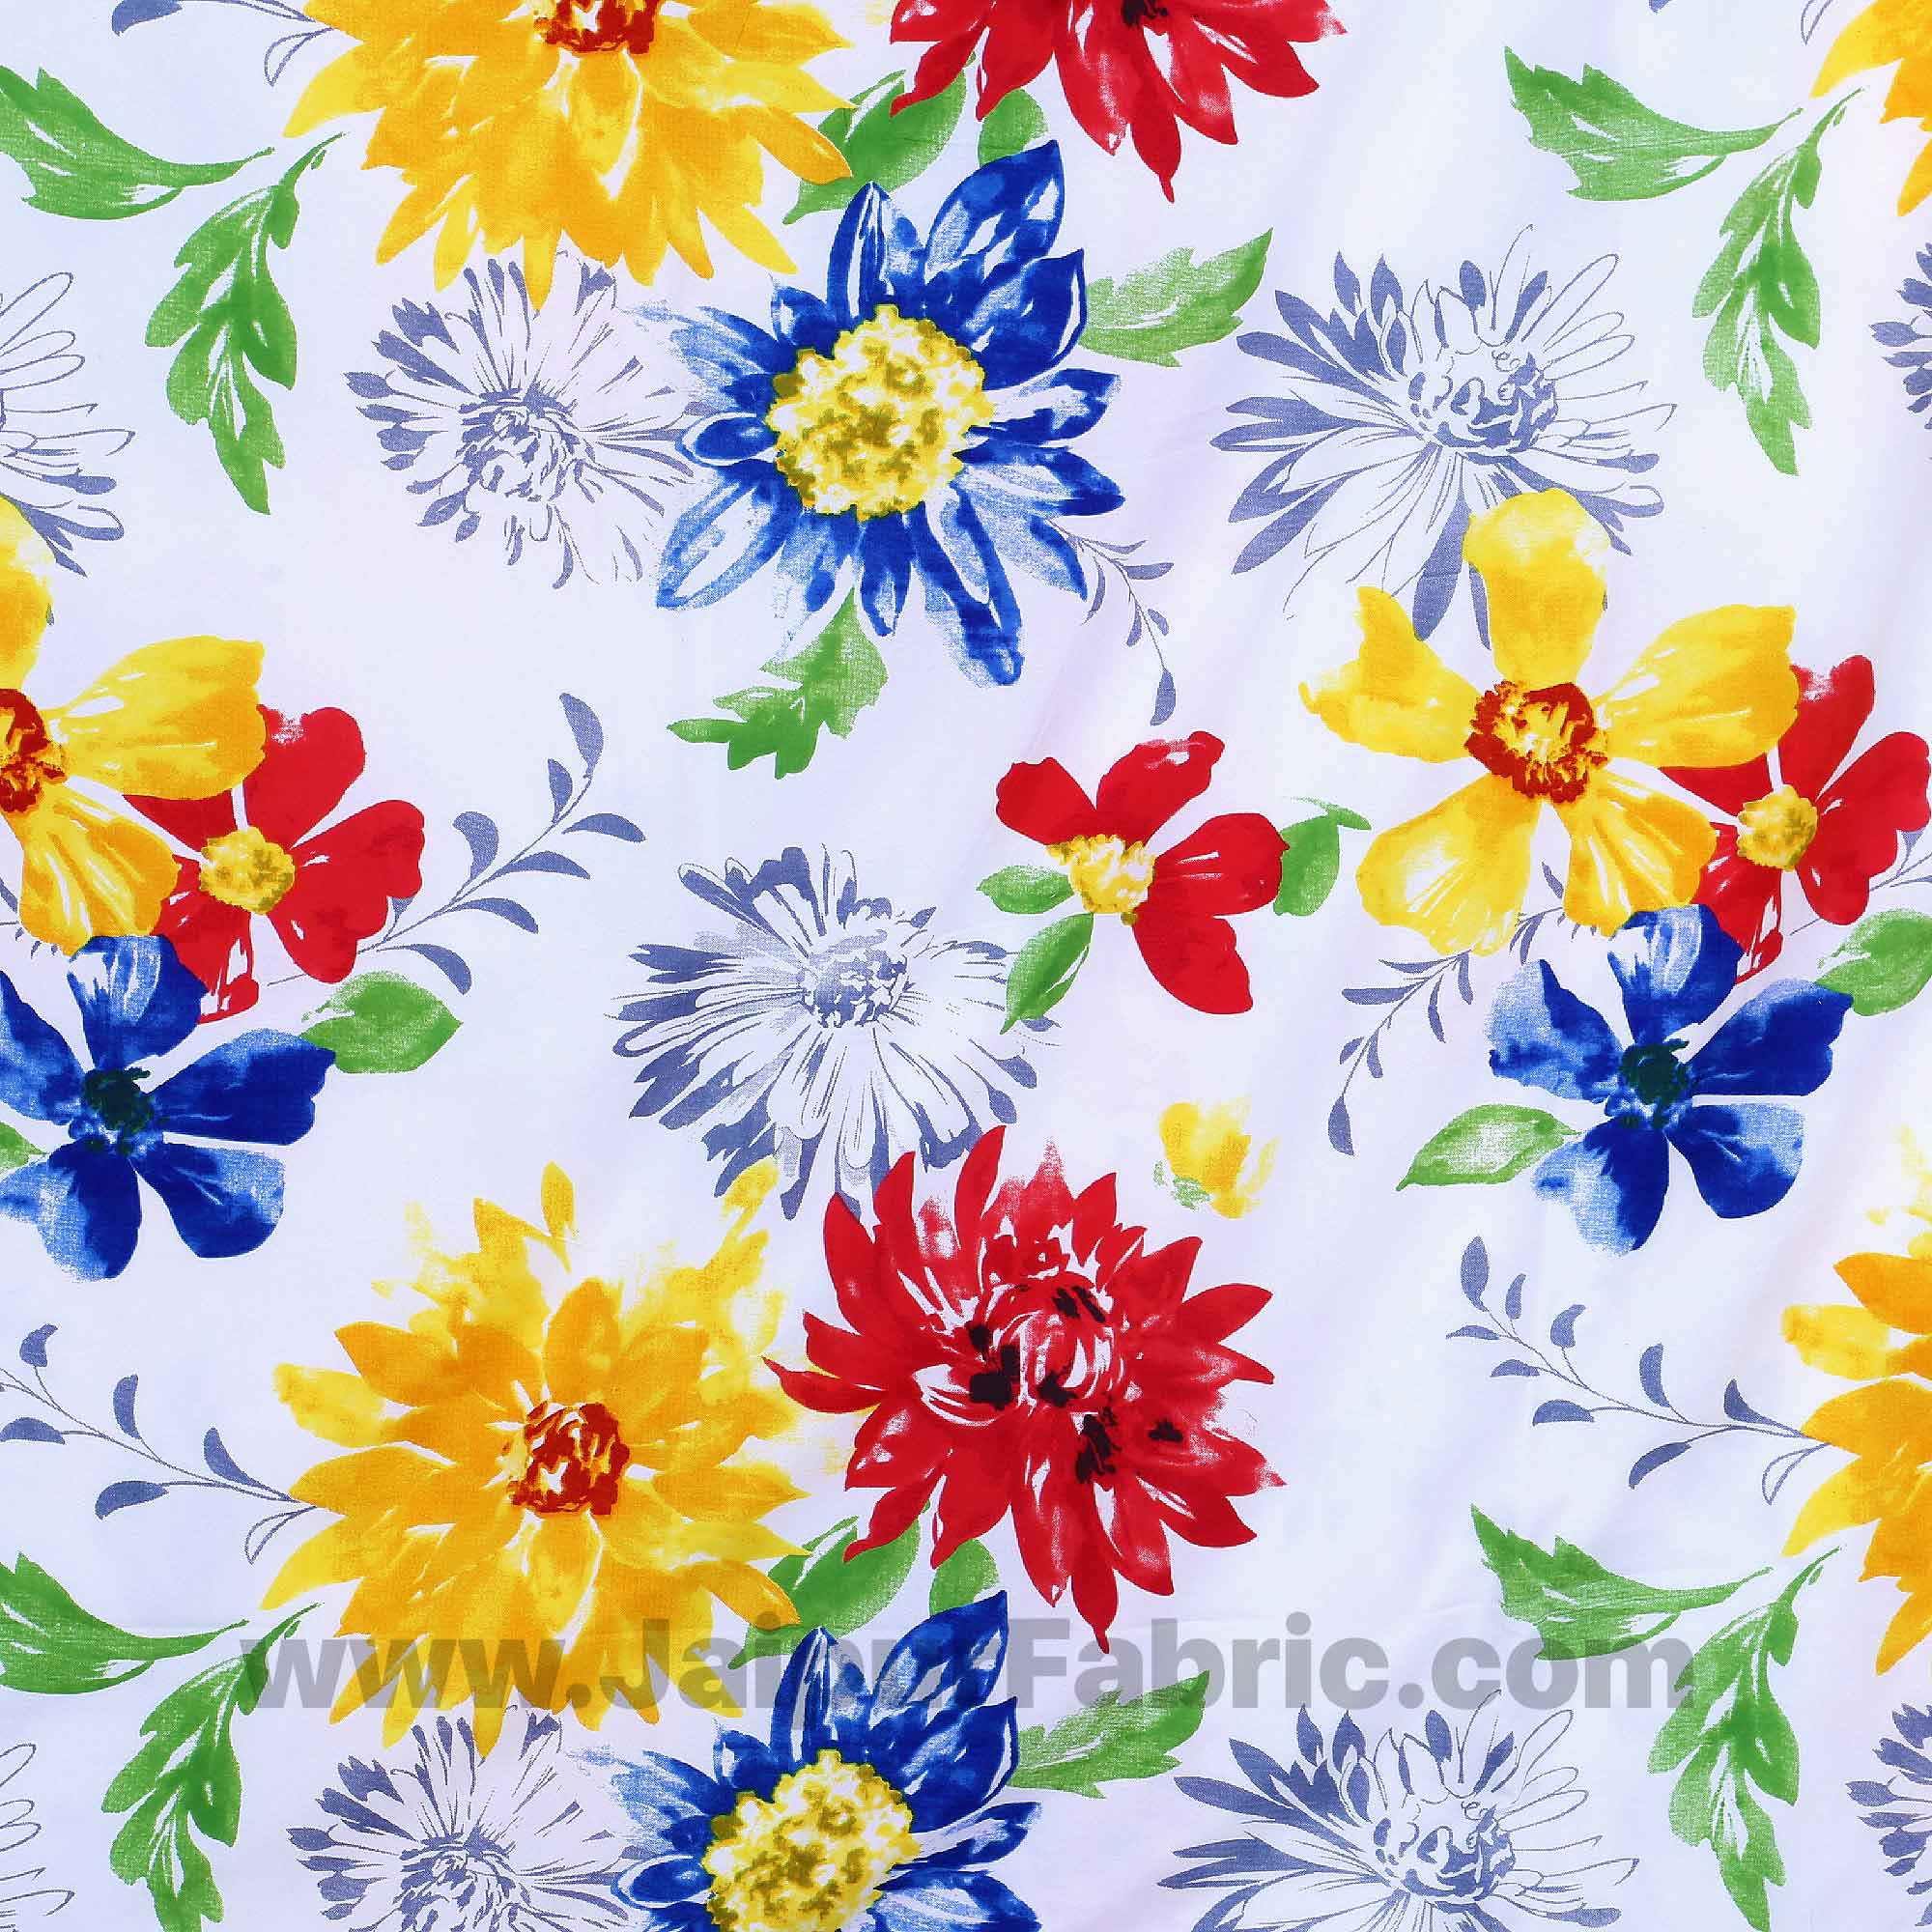 Cotton Colorful Blooming Flowers Reversible Single Blanket/Duvet/Quilt/AC Dohar